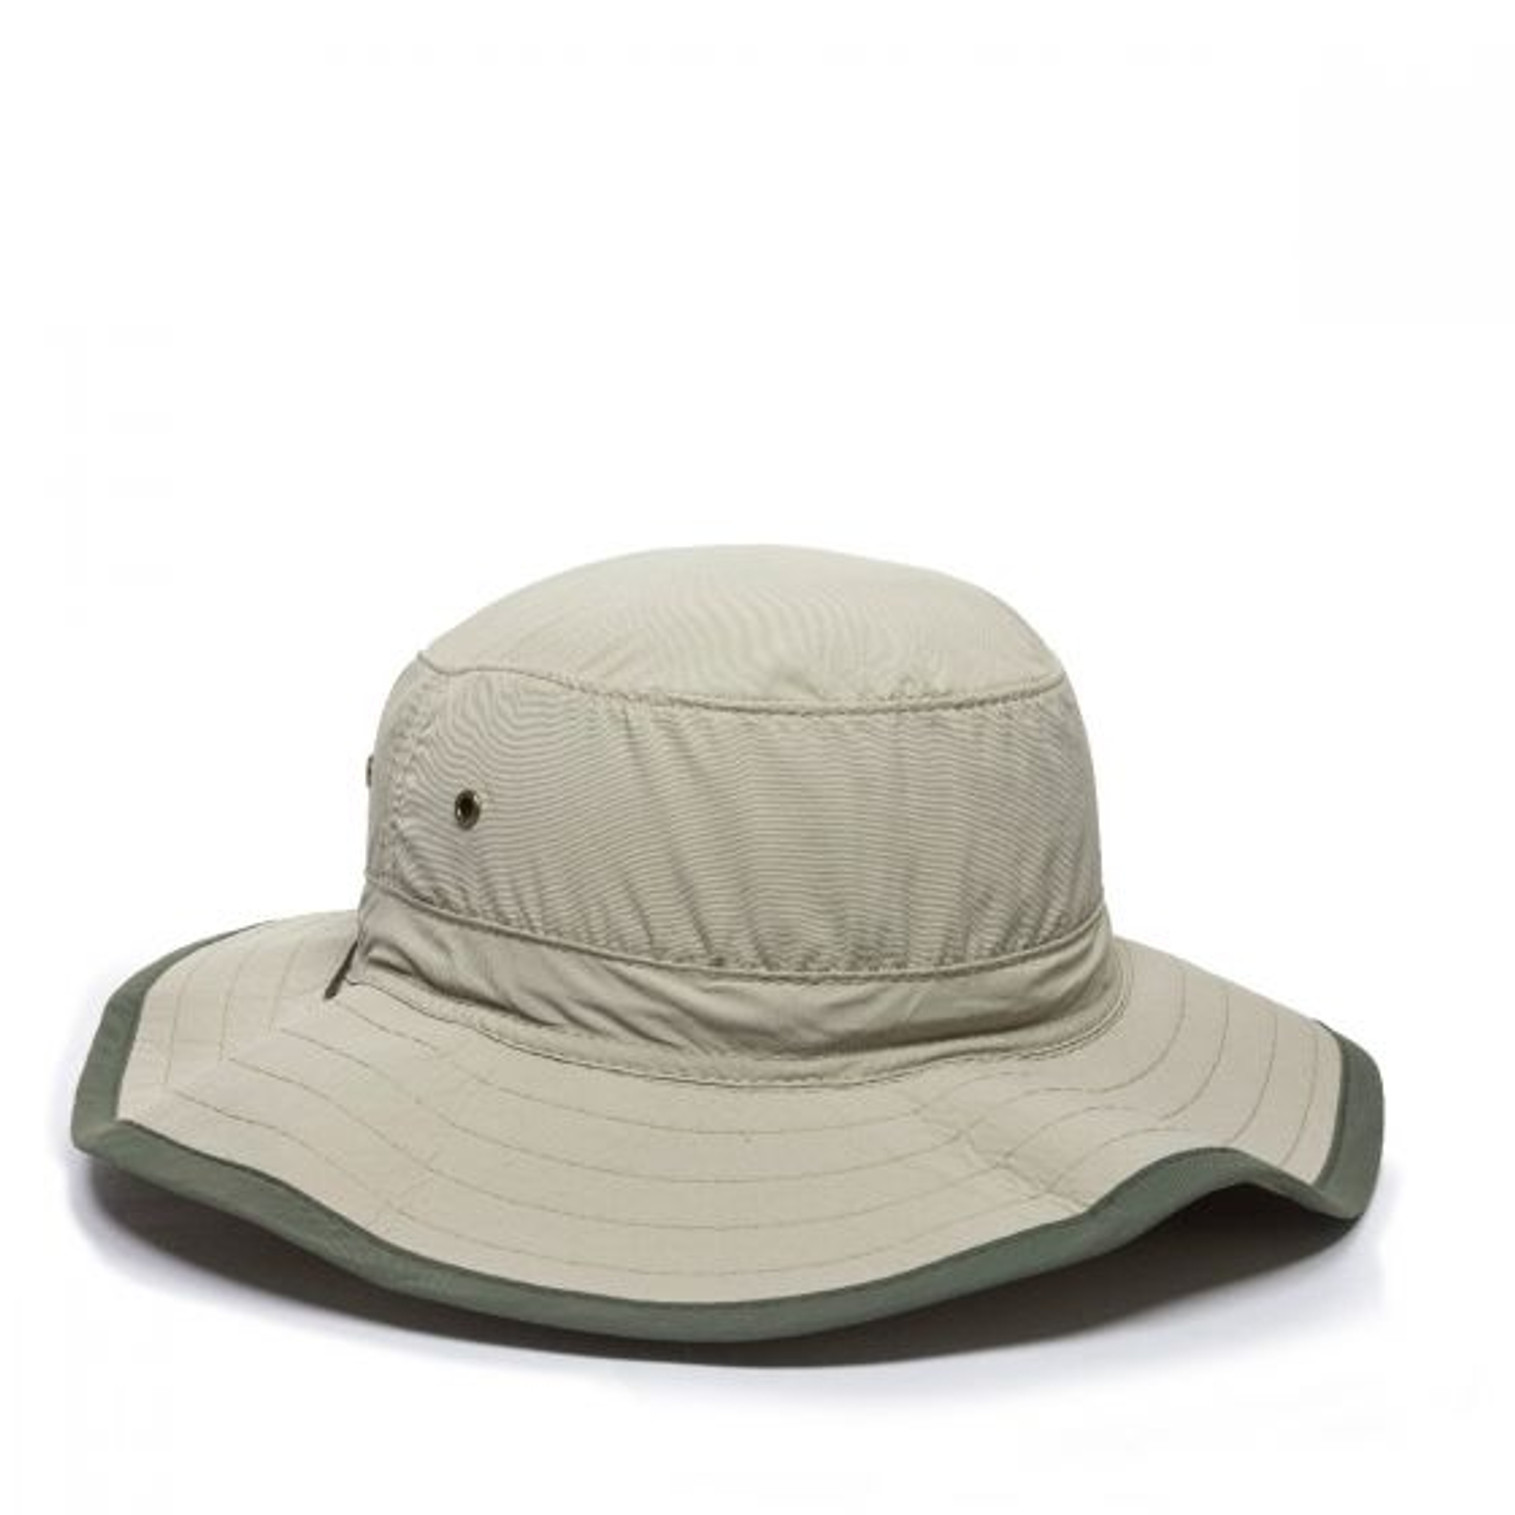 Khaki Boonie Hat